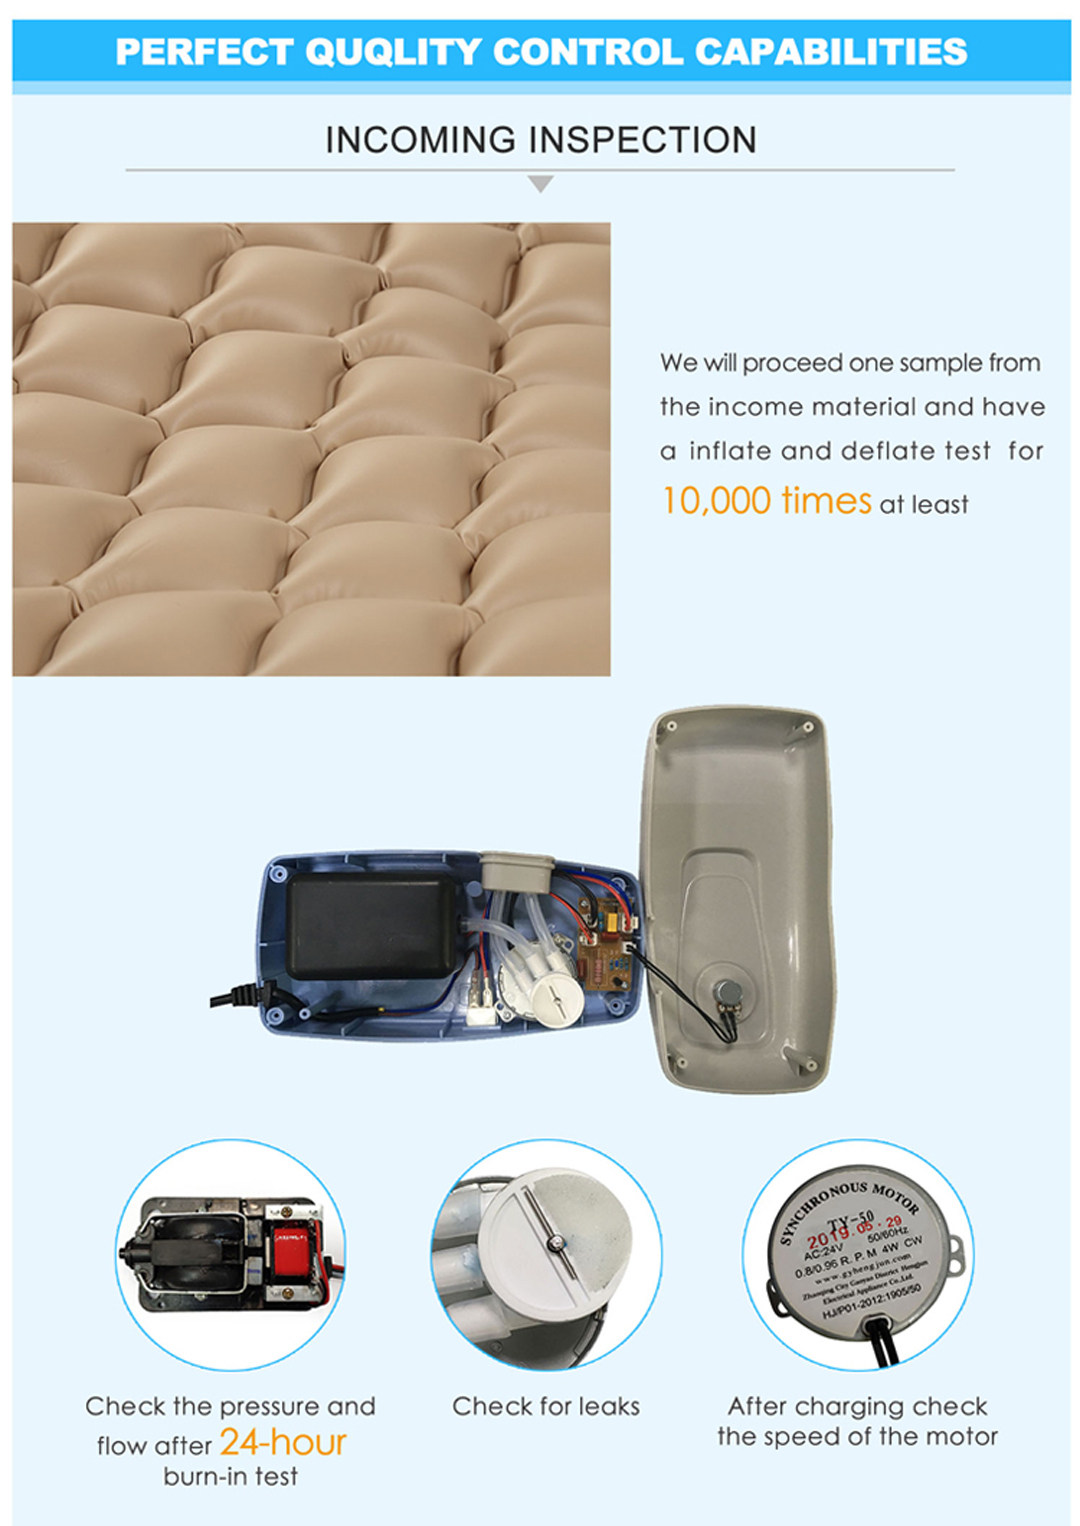 bedsore mattress for hospital